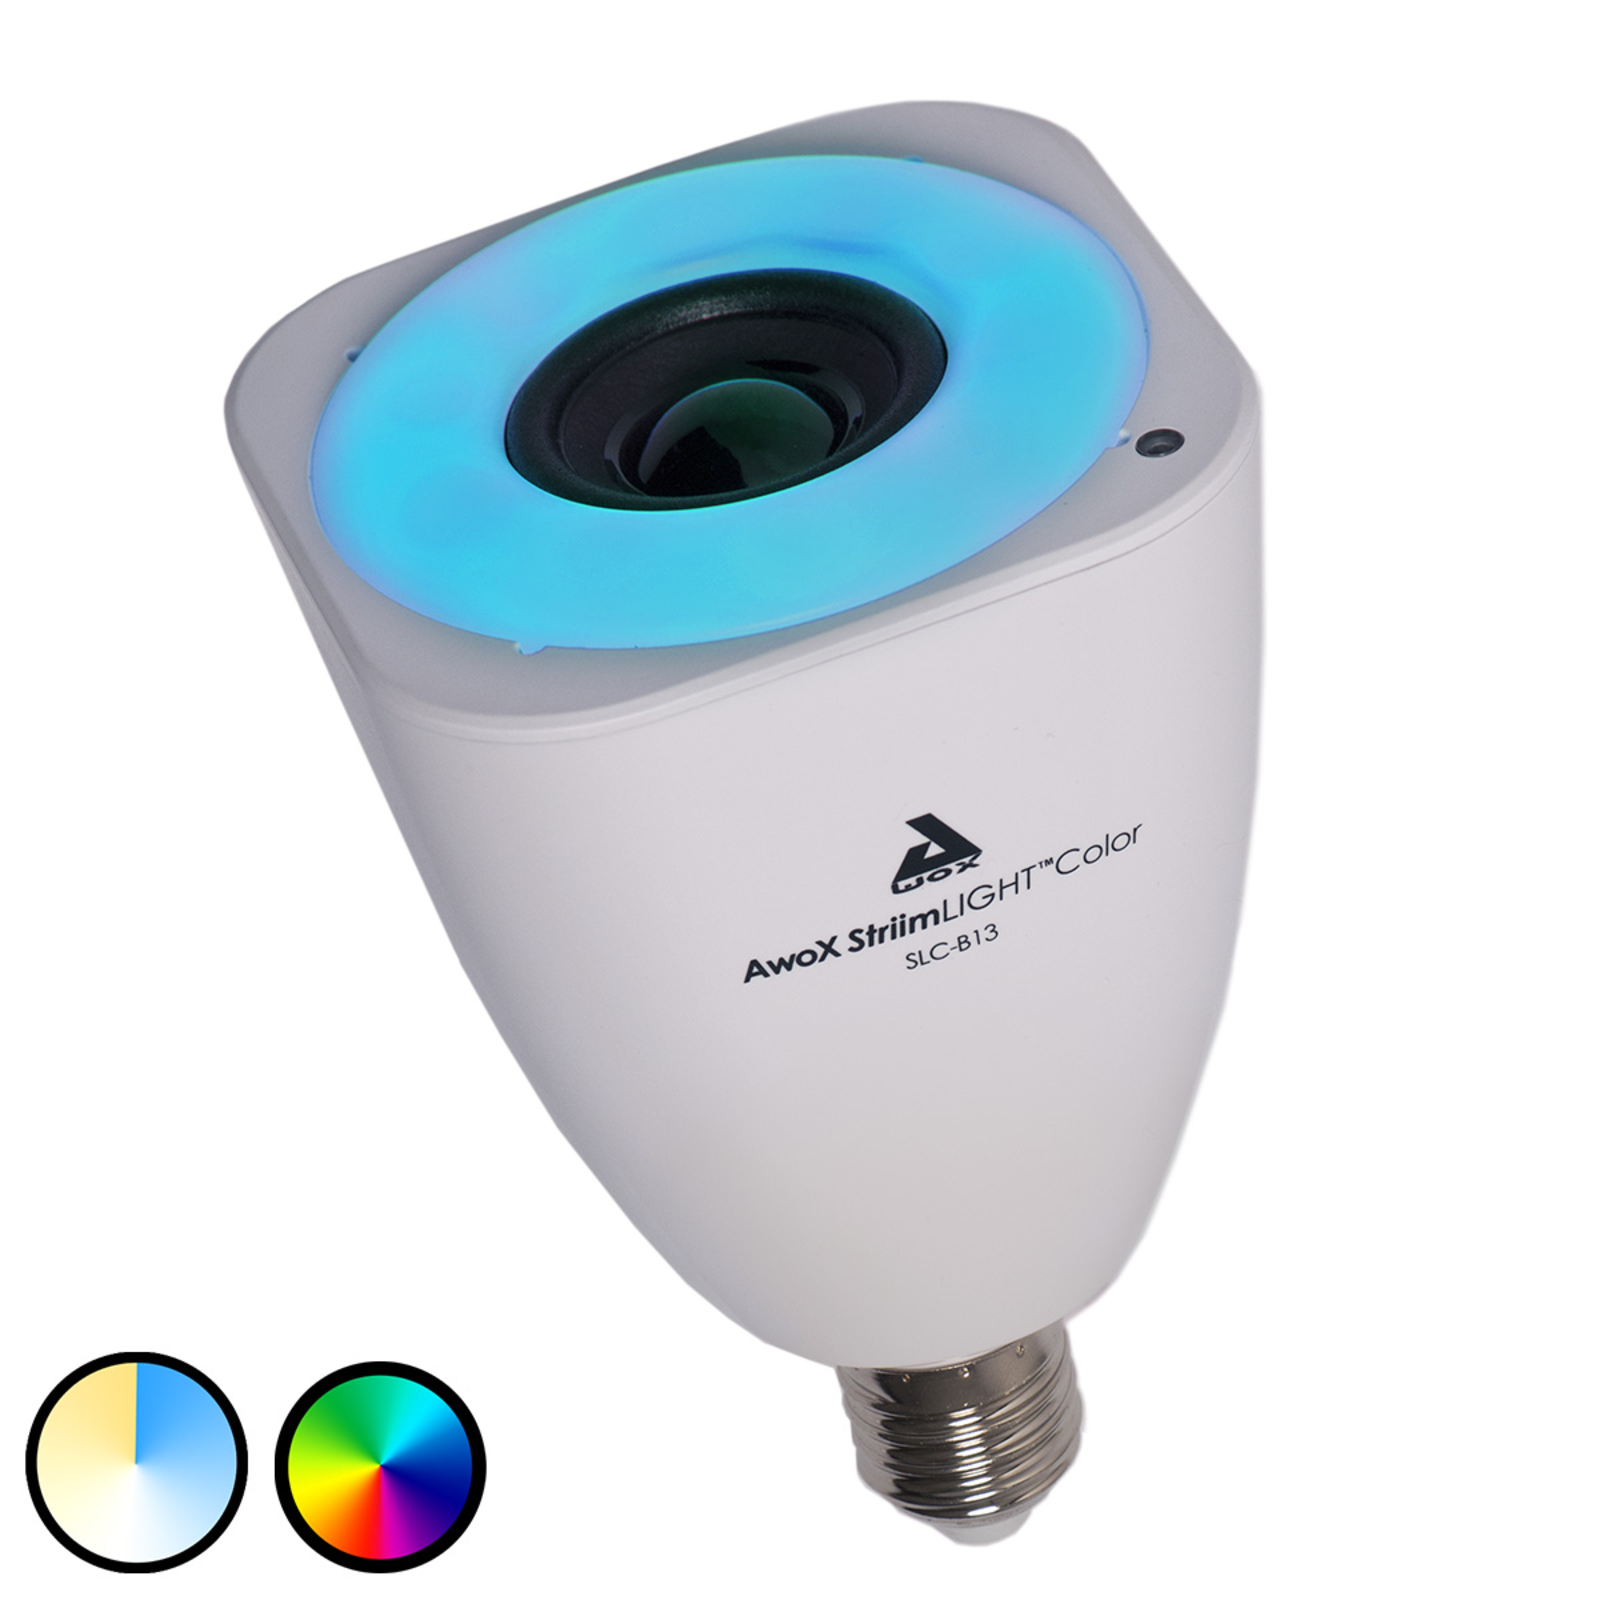 AwoX StriimLIGHT Color LED-pære E27, Bluetooth